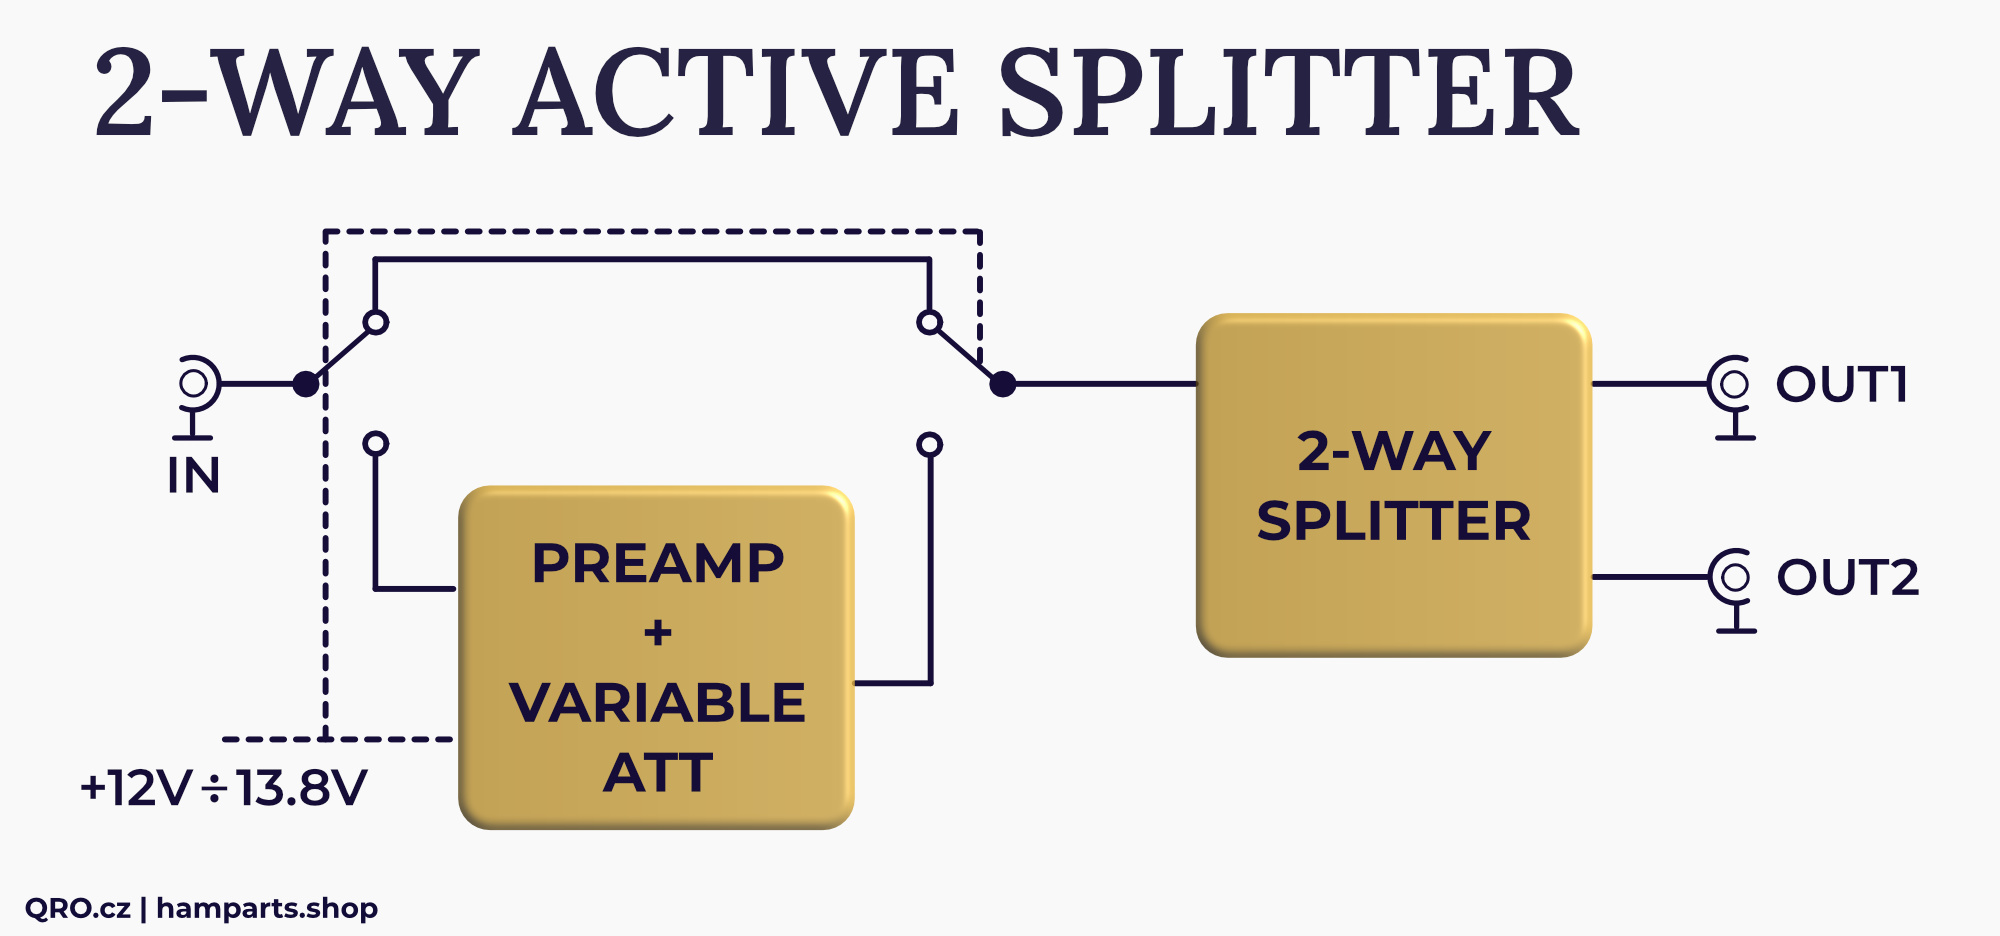 2-way active splitter  by qro.cz hamparts.shop